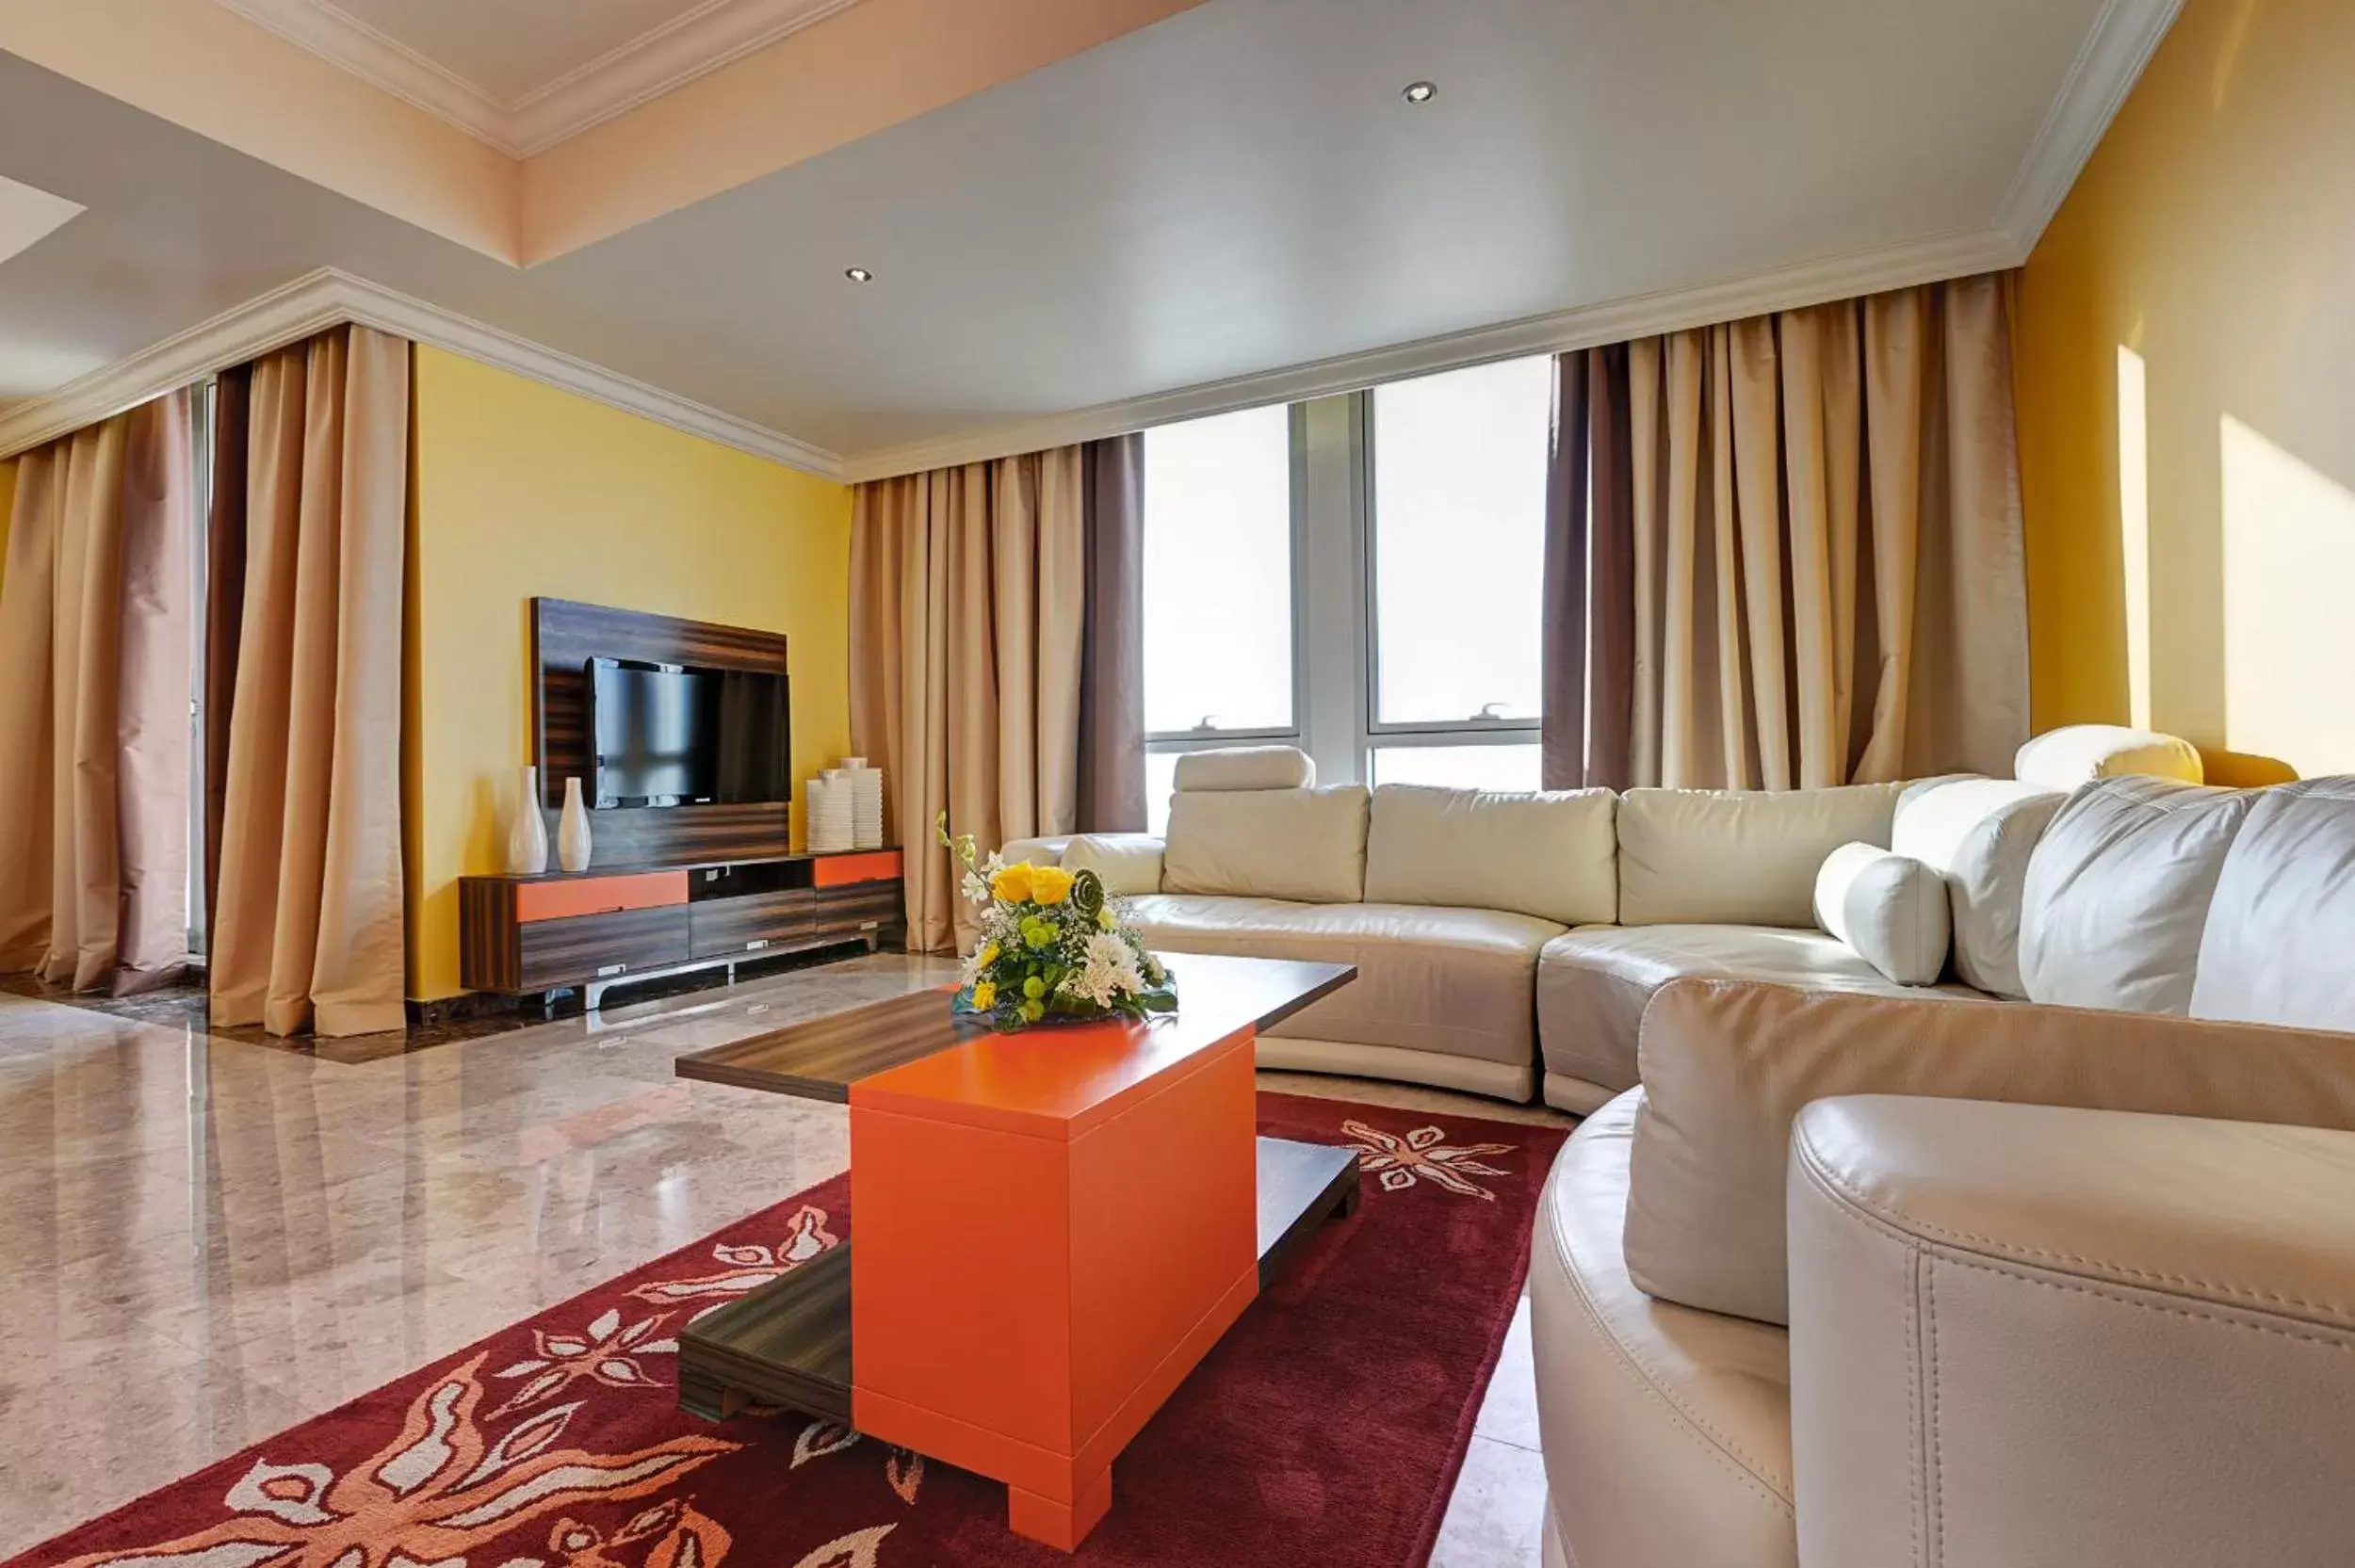 TV and multimedia, Seating Area in Abidos Hotel Apartment Dubai Land